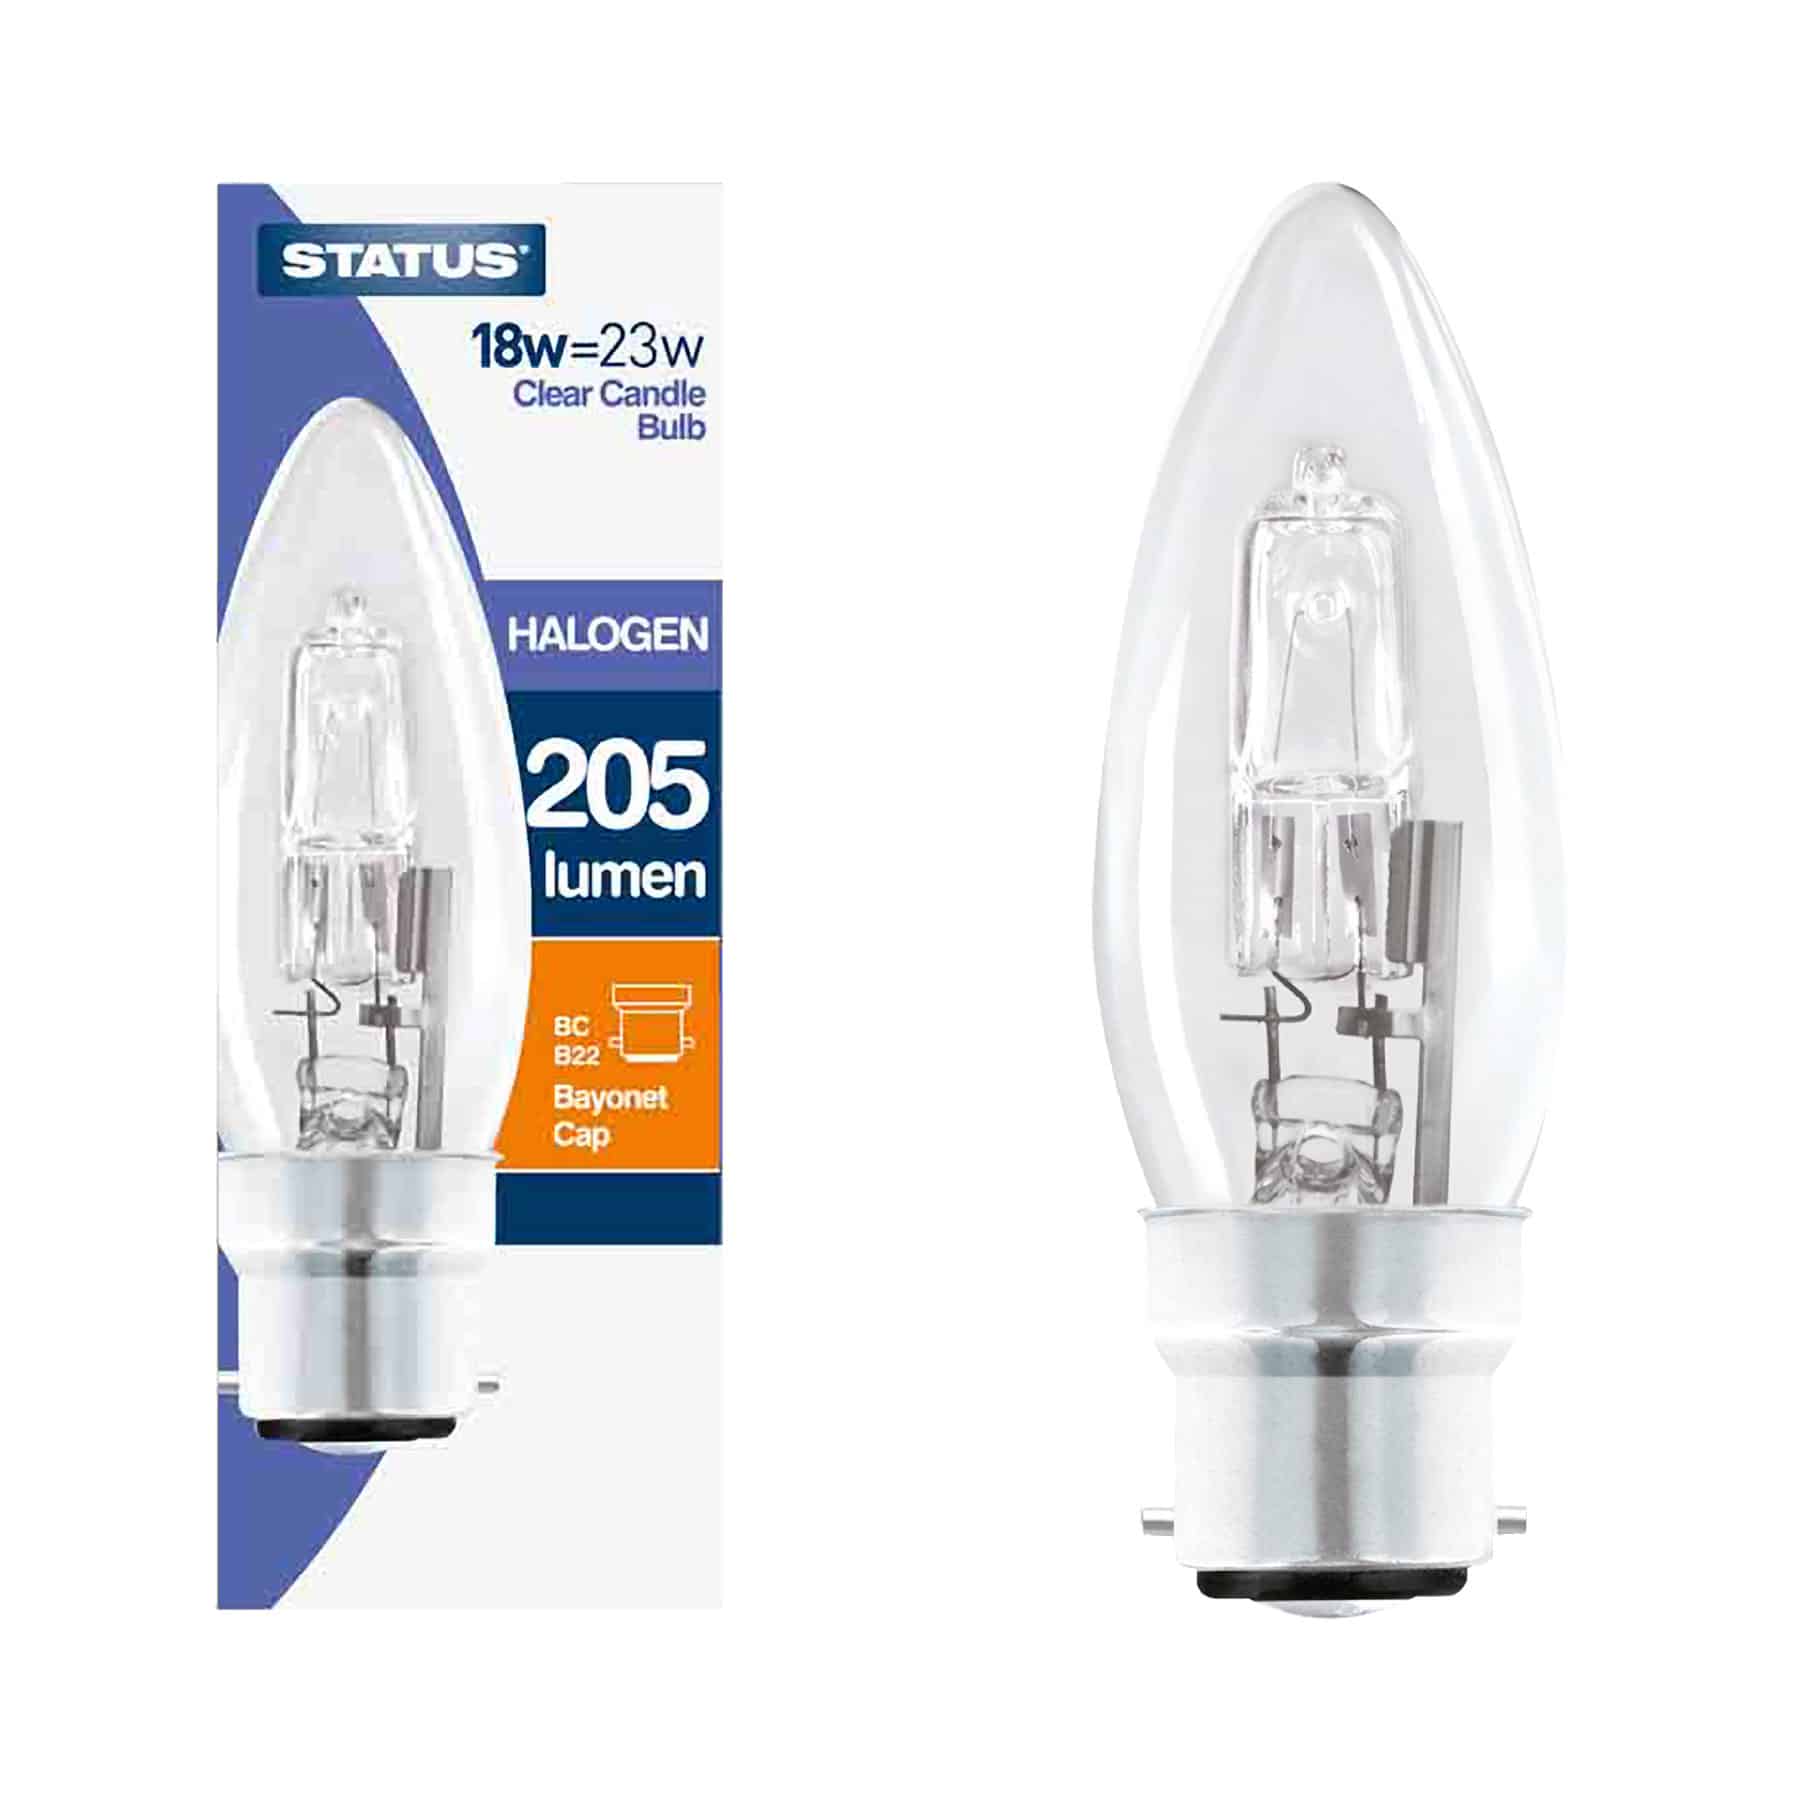 Clear Halogen candle bulb 18 Watt 205 lumens BC/B22 Bell brand